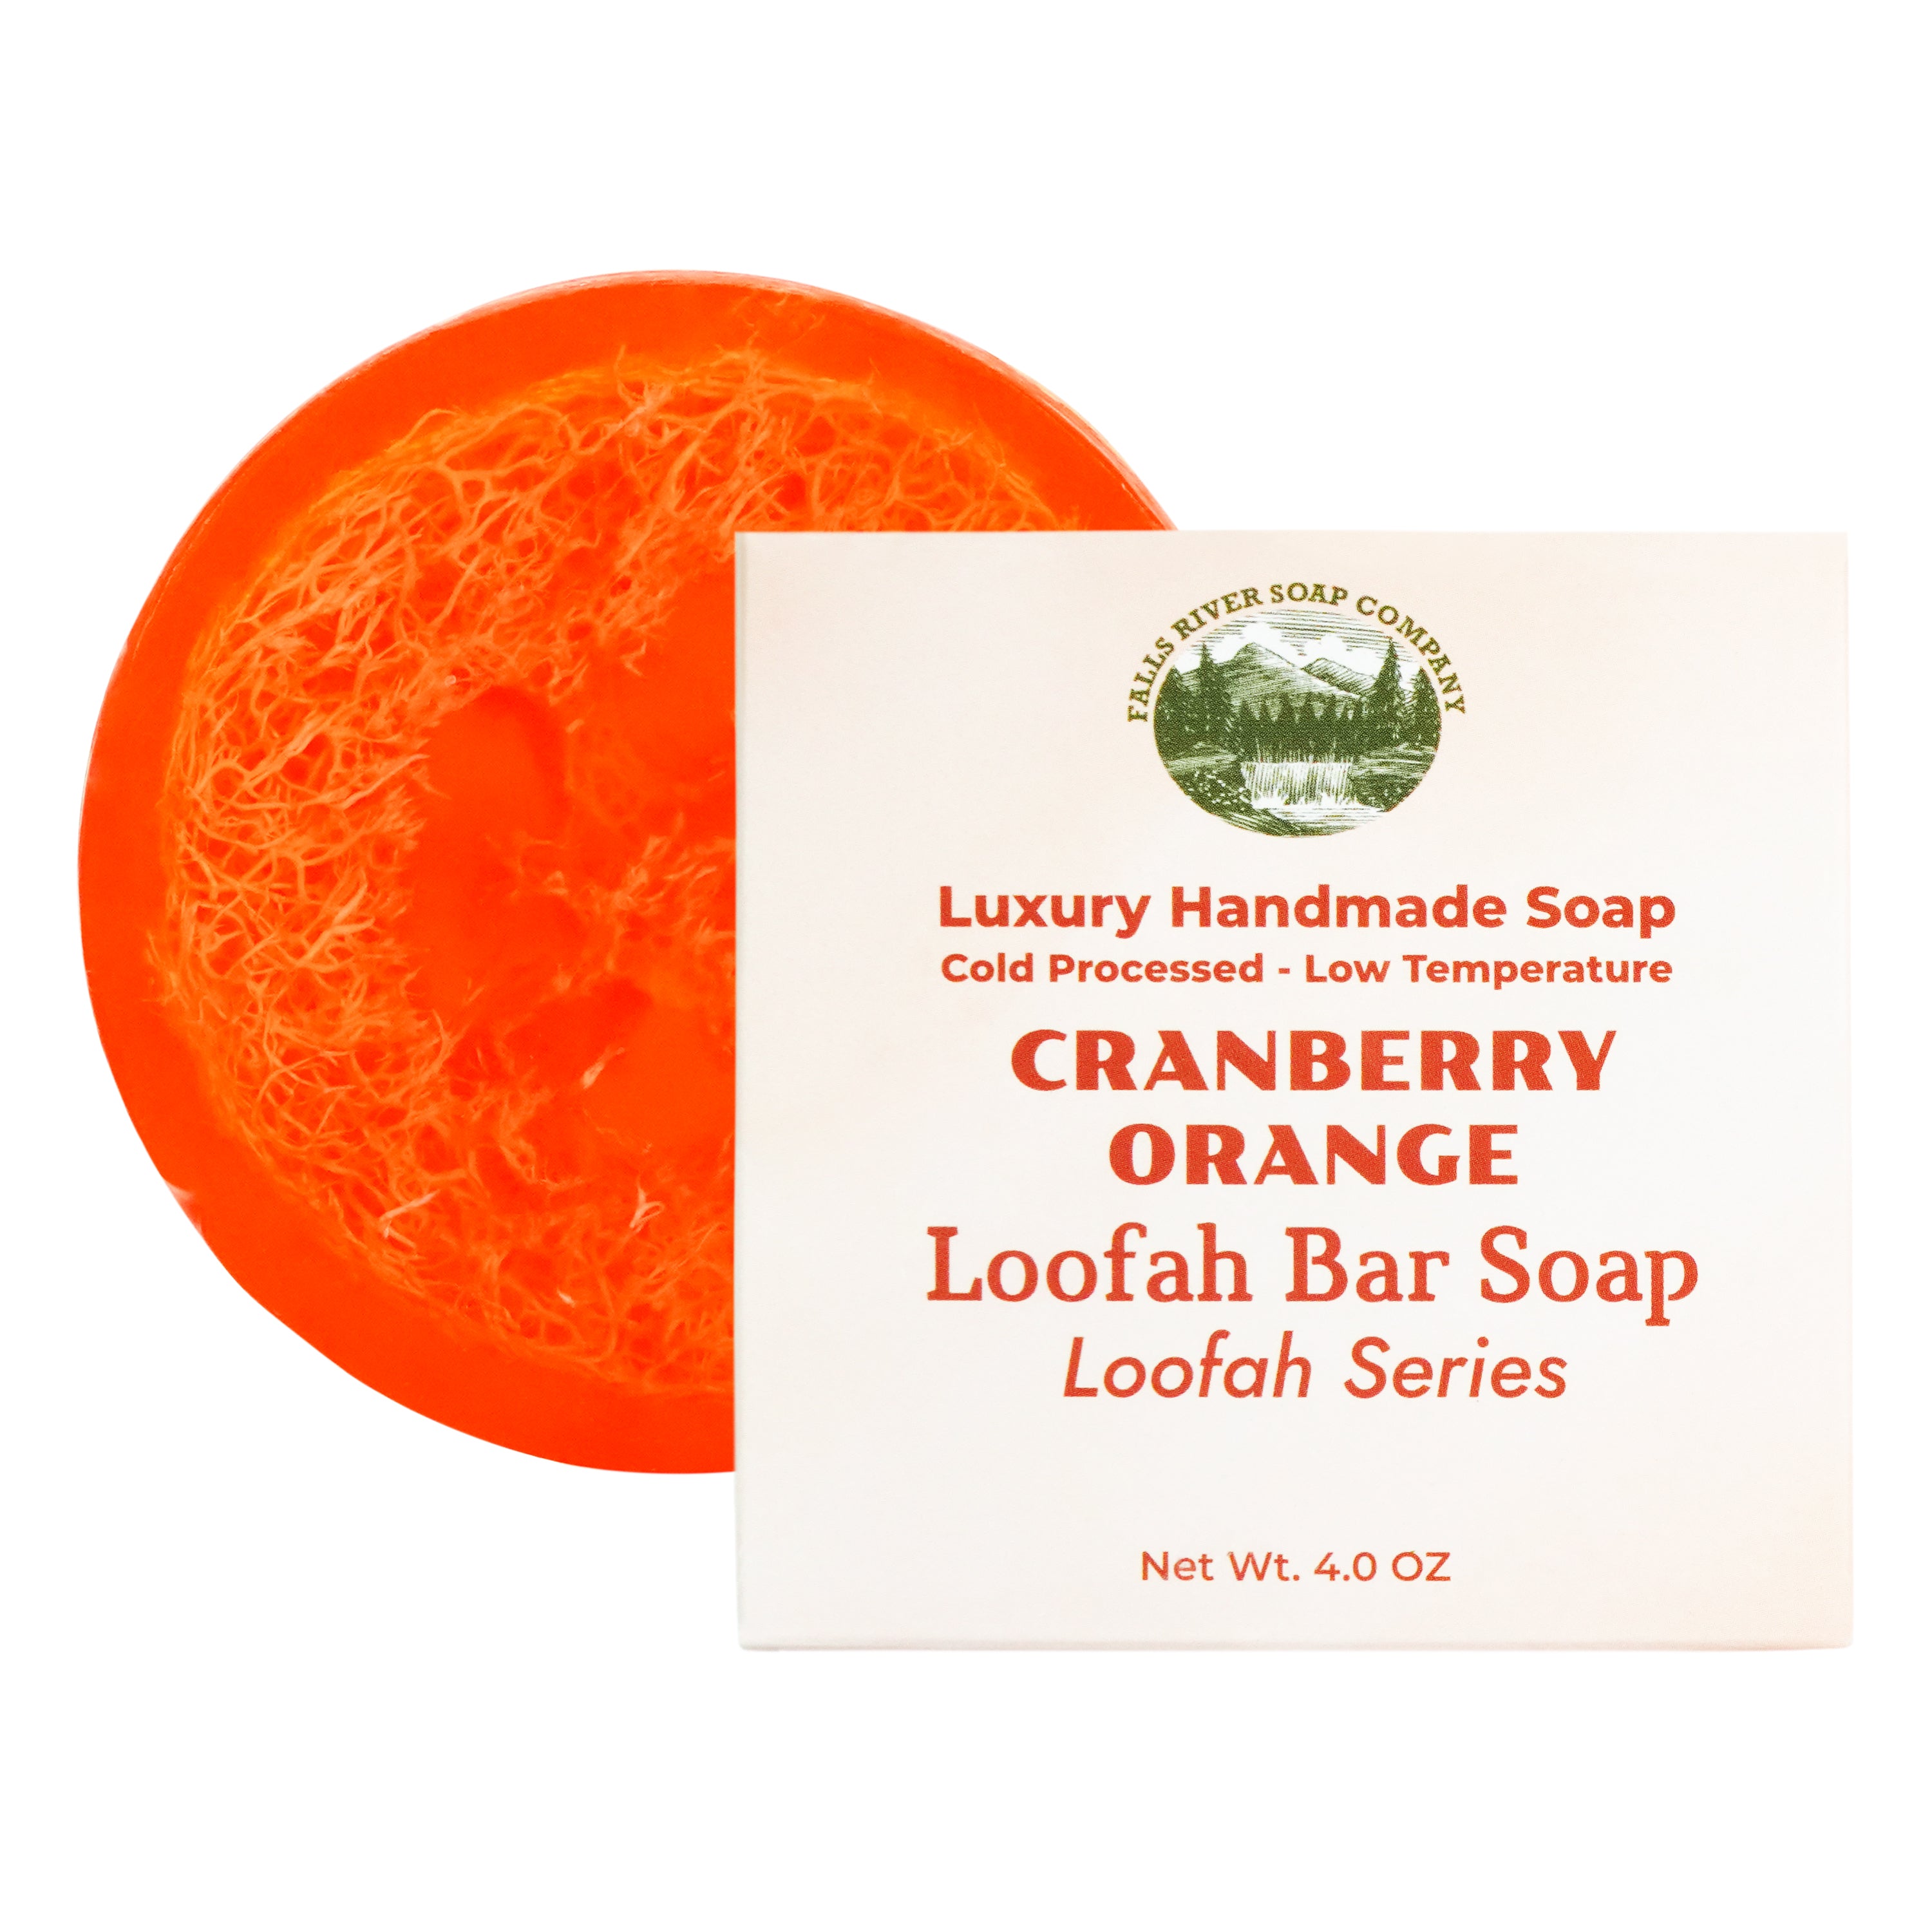 Cranberry Orange 4 oz Natural Luffa Soap Bar - Exfoliating Soap with Loofah Inside - Eco-Friendly, Natural Soap with Loofah Inside - Falls River Soap